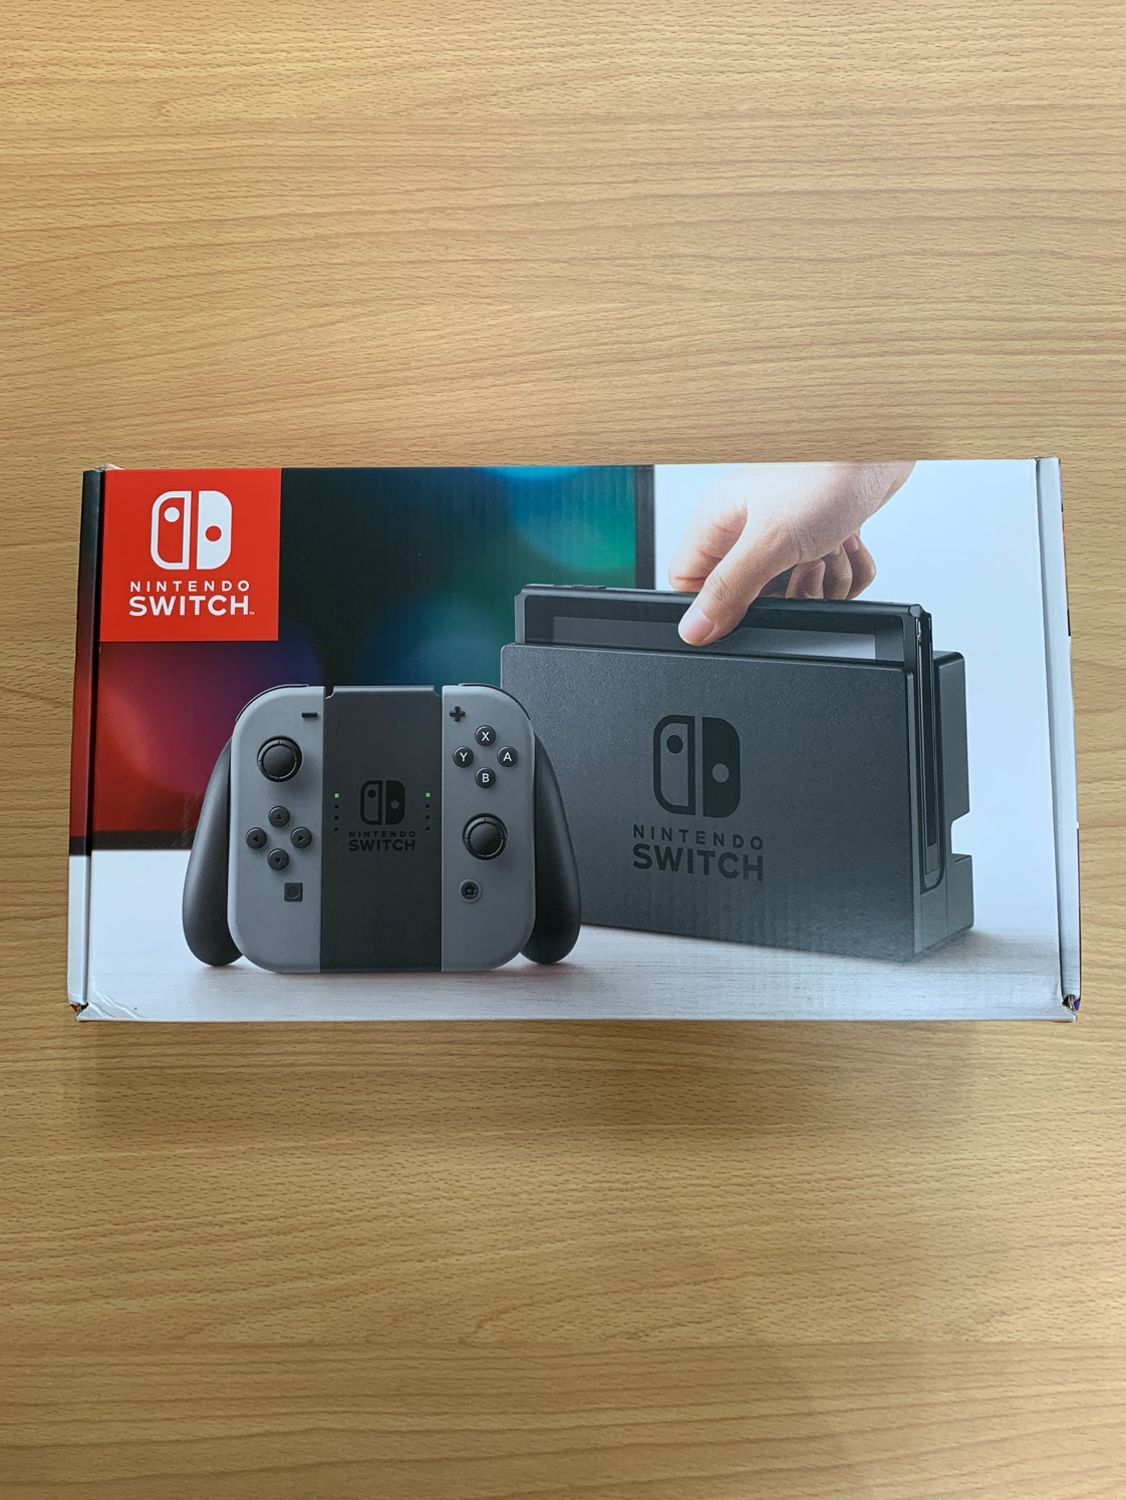 Nintendo Switch Joy-Con L R グレー